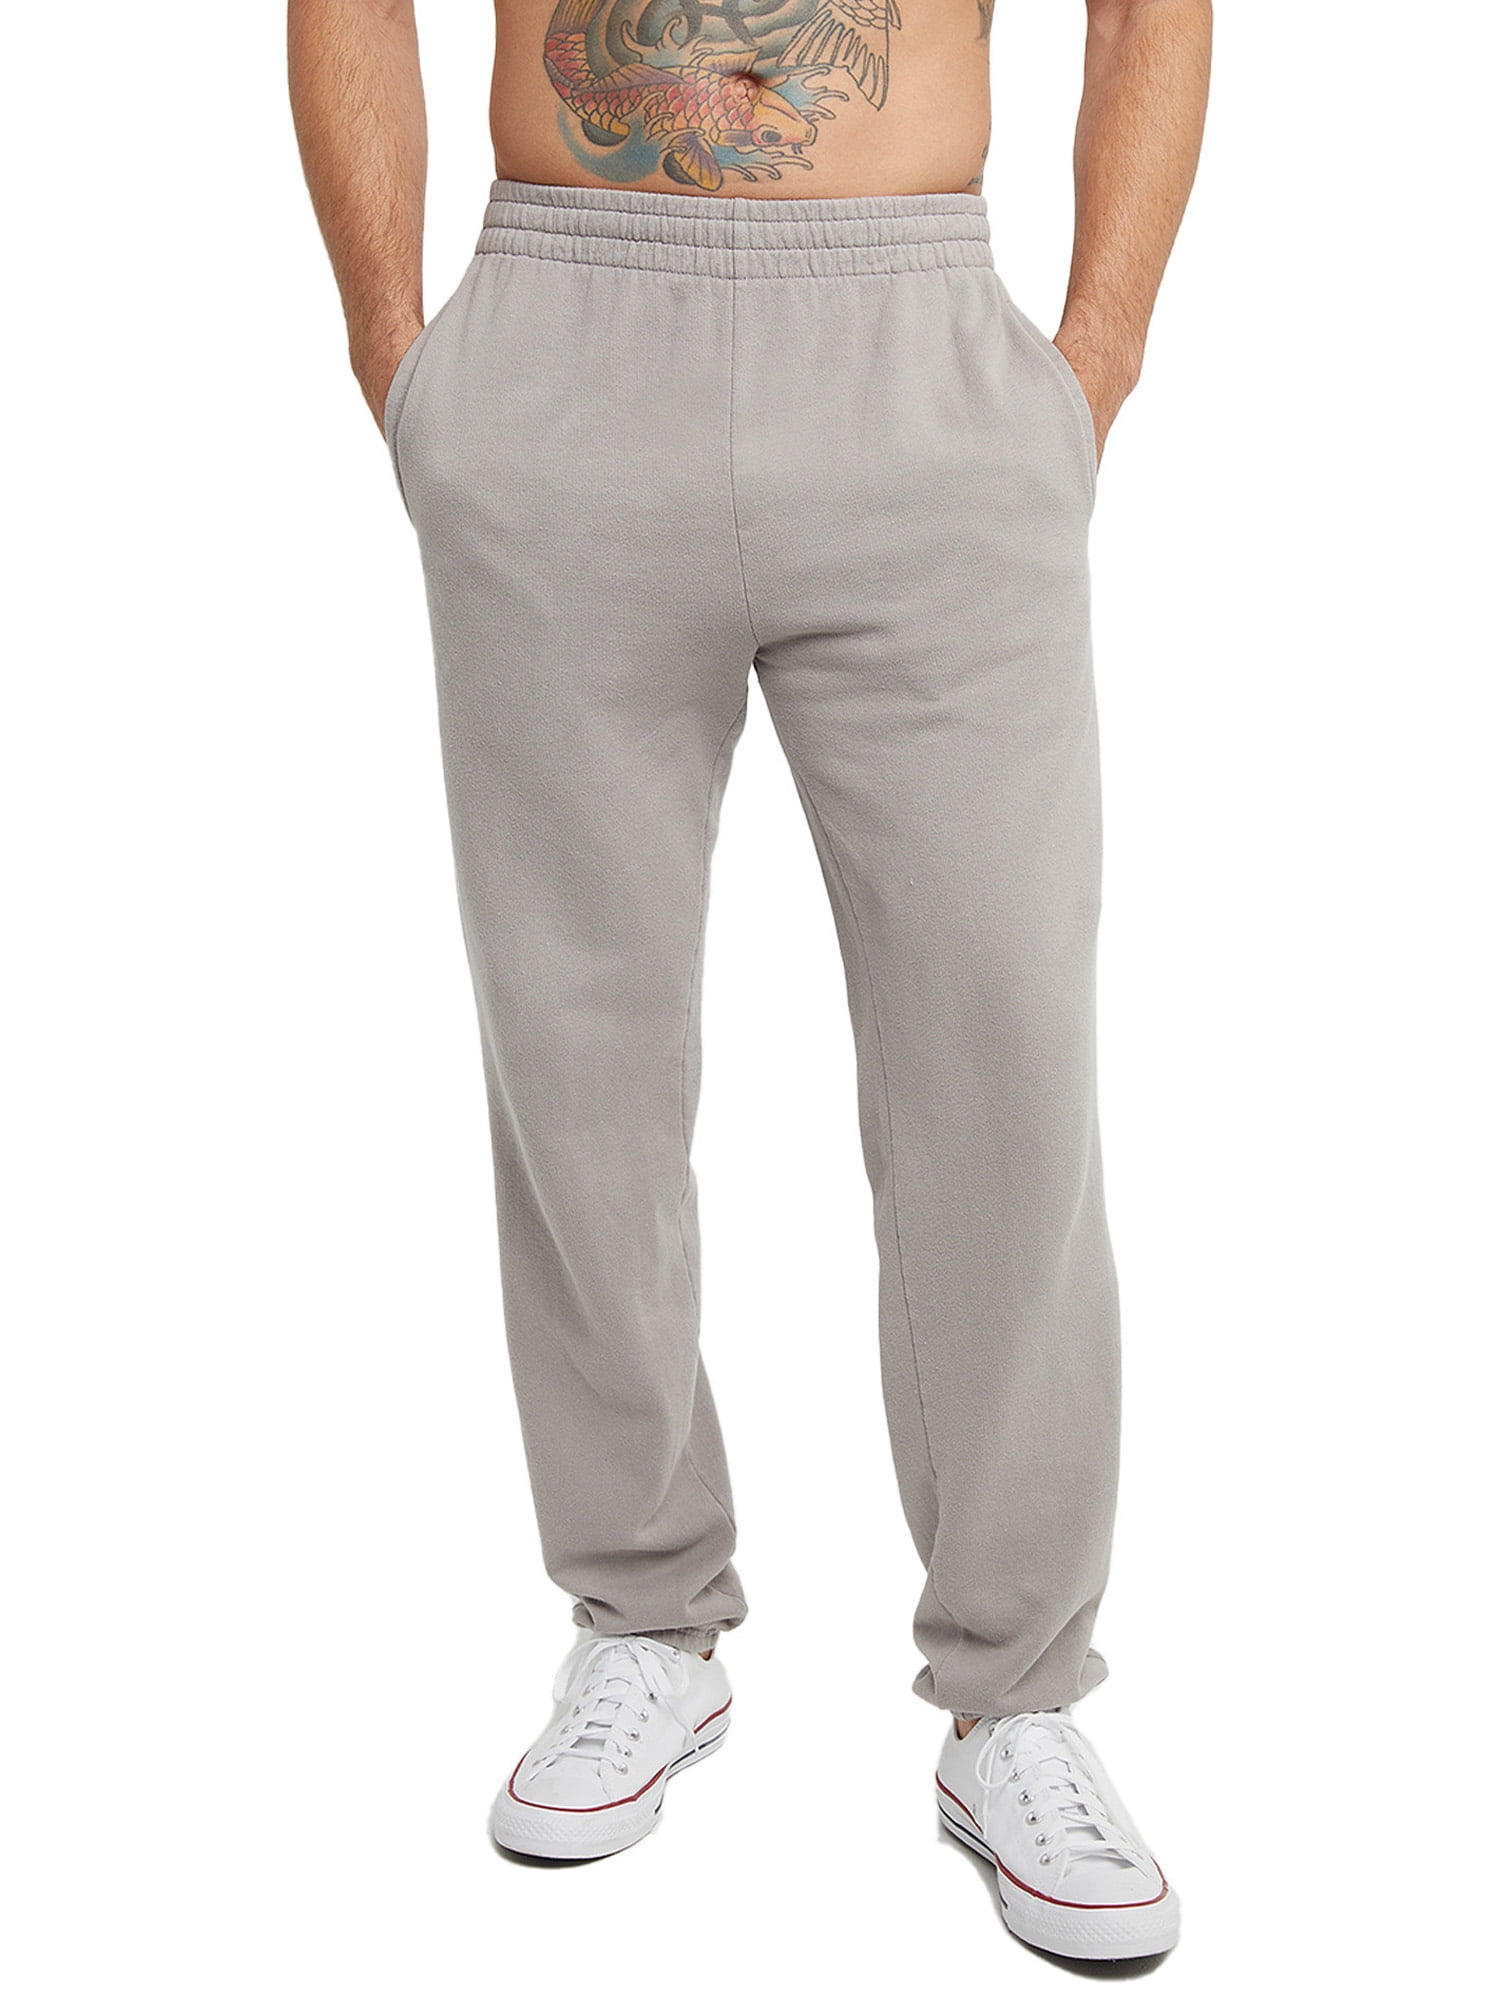 Hanes Originals Men's Garment Dyed Sweatpants with Pockets, 31